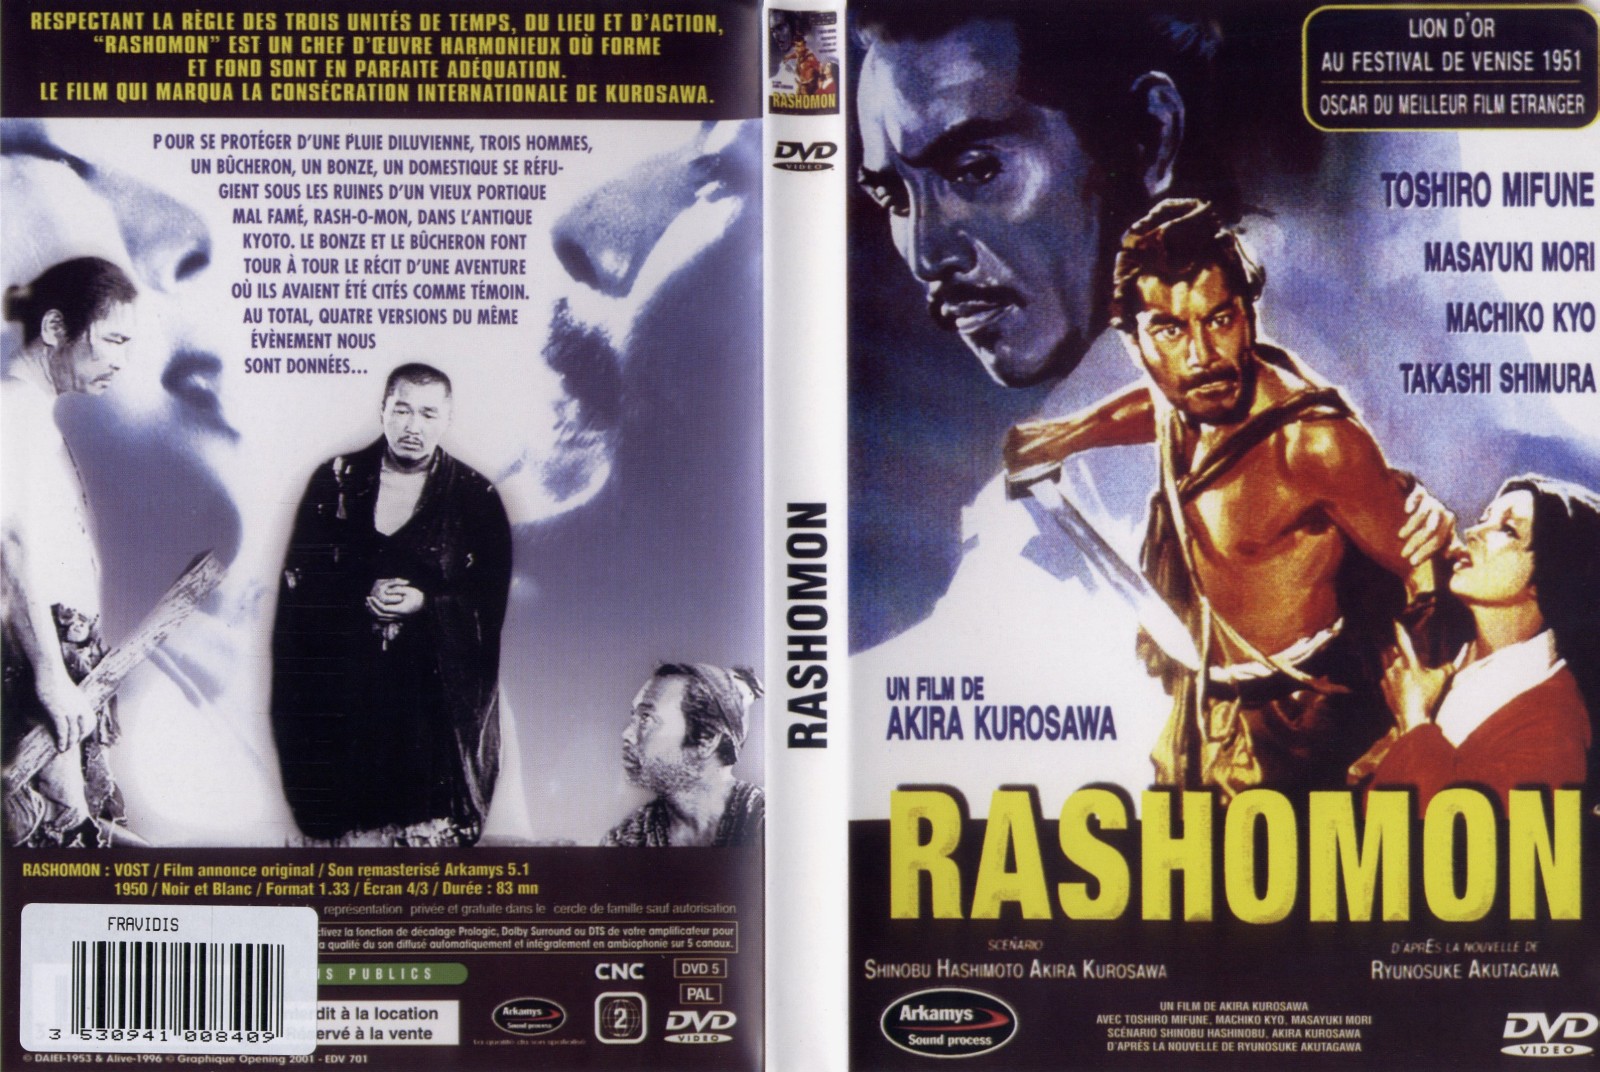 Jaquette DVD Rashomon